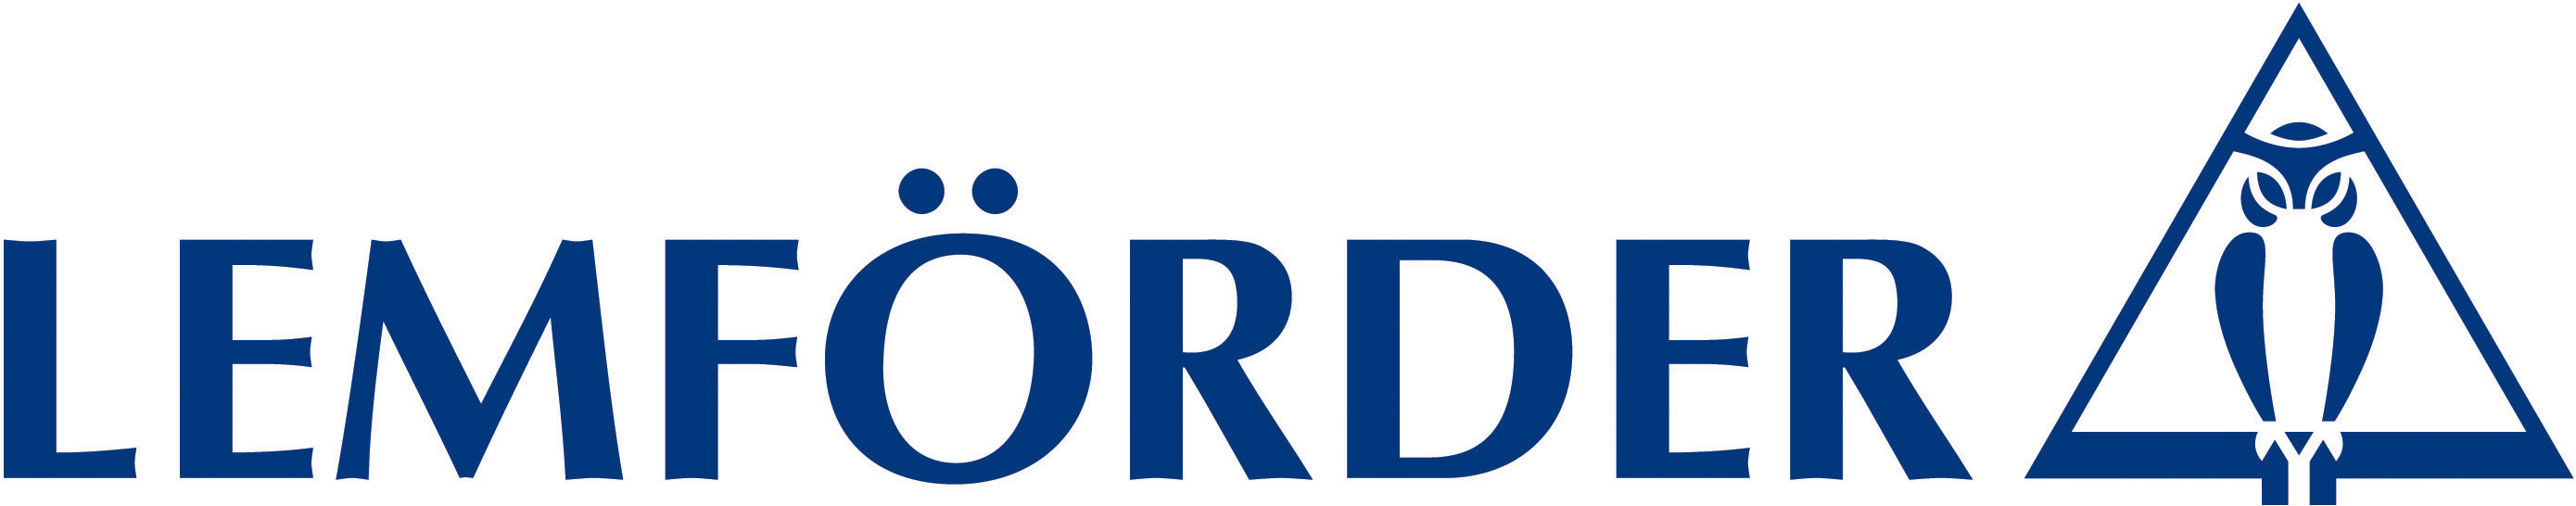 Логотип производителя LEMFORDER